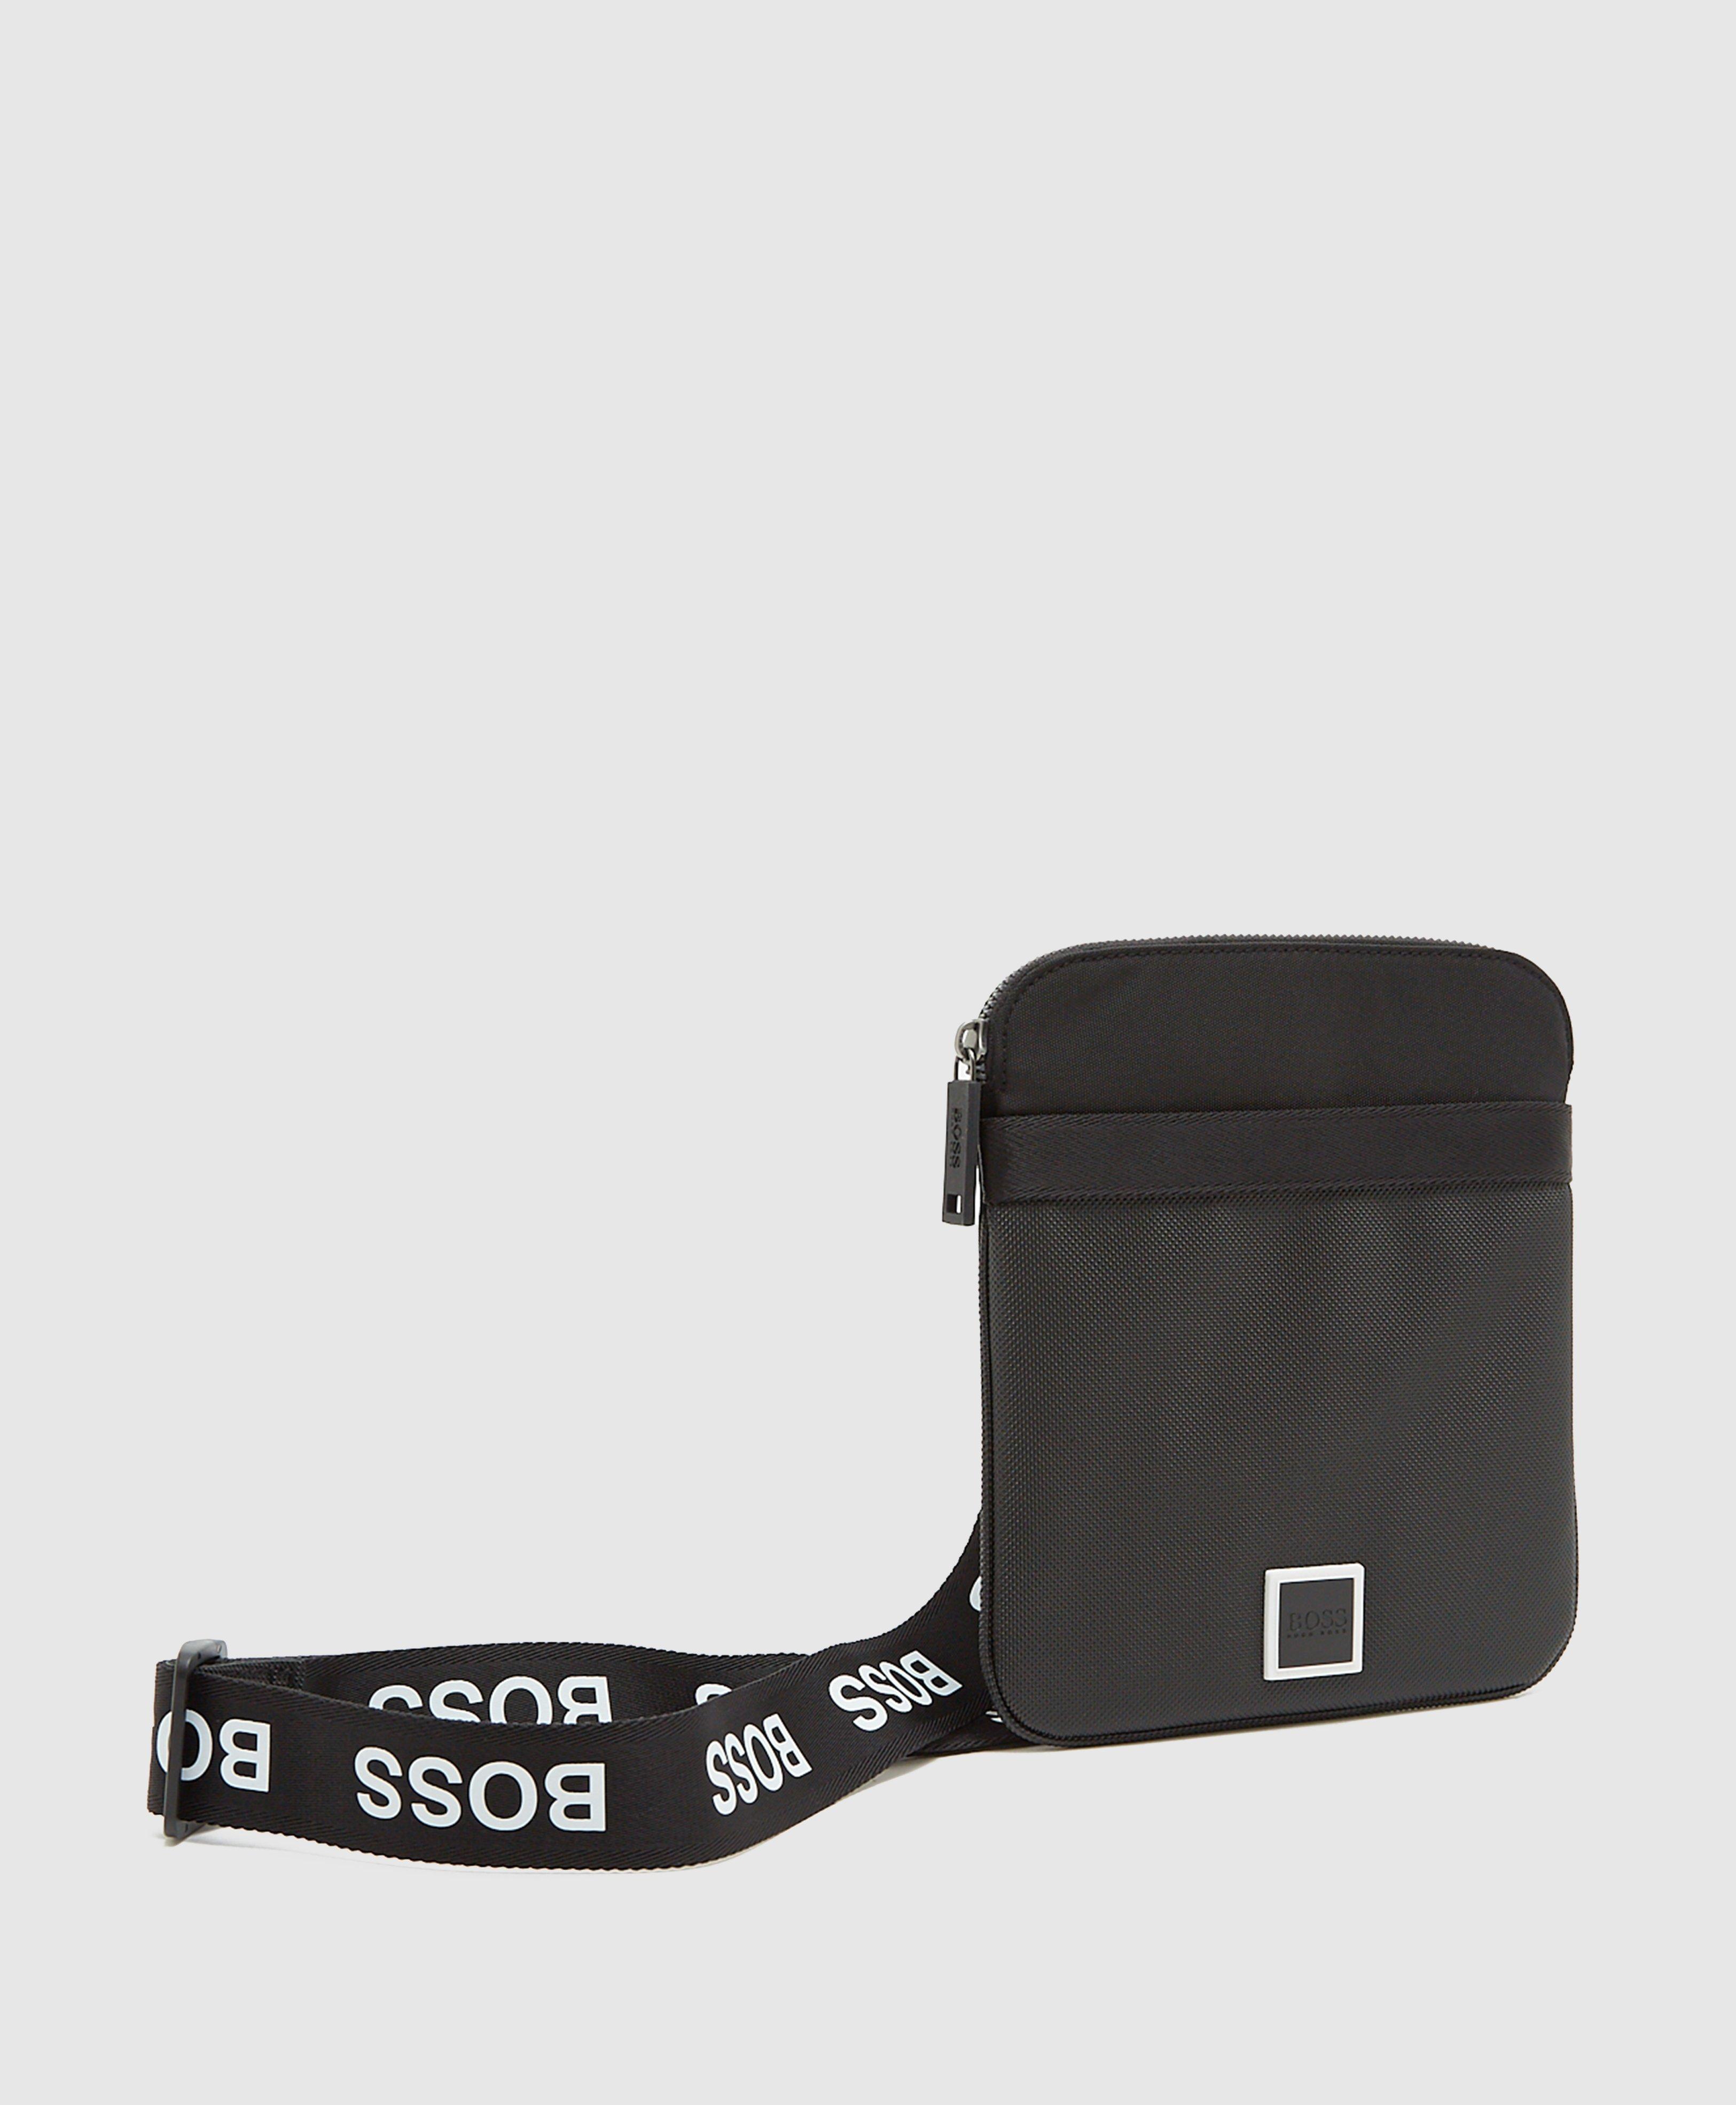 BOSS by Hugo Boss Pixel Cross Body Bag in Black for Men - Save 34% - Lyst